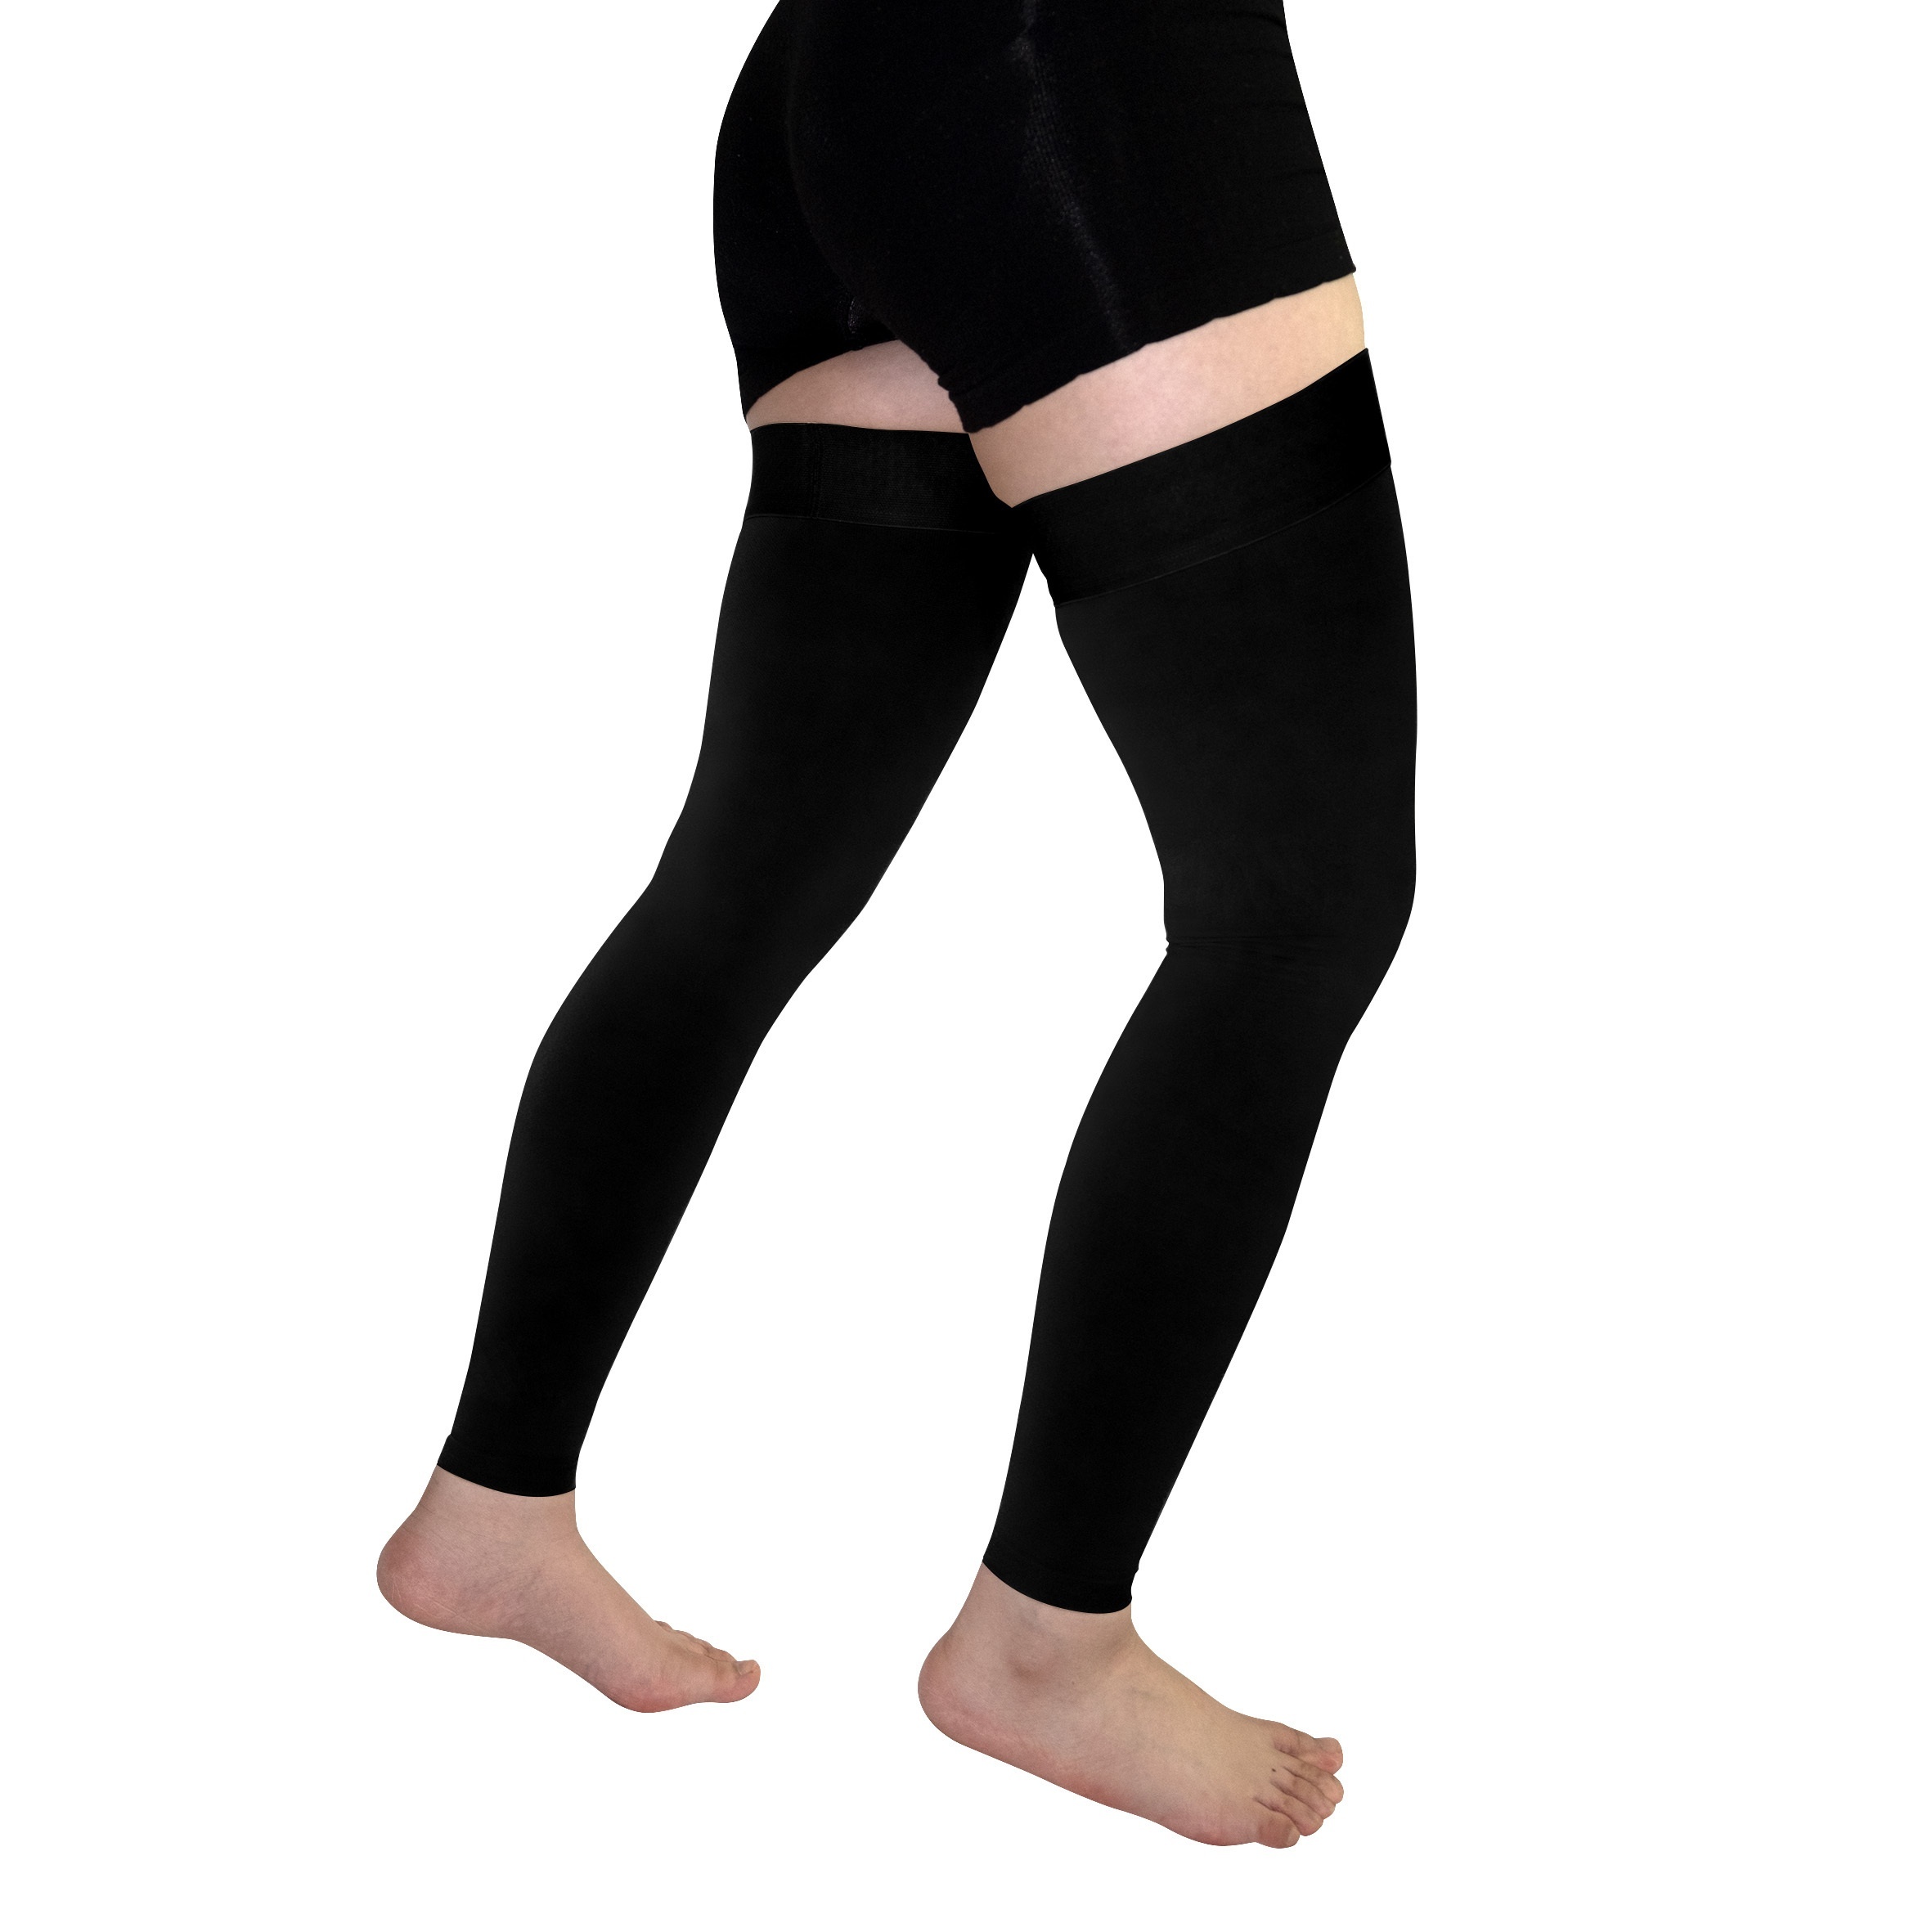 Ztl Thigh High Compression Stockings Women Men, 30-40 mmHg, Footless